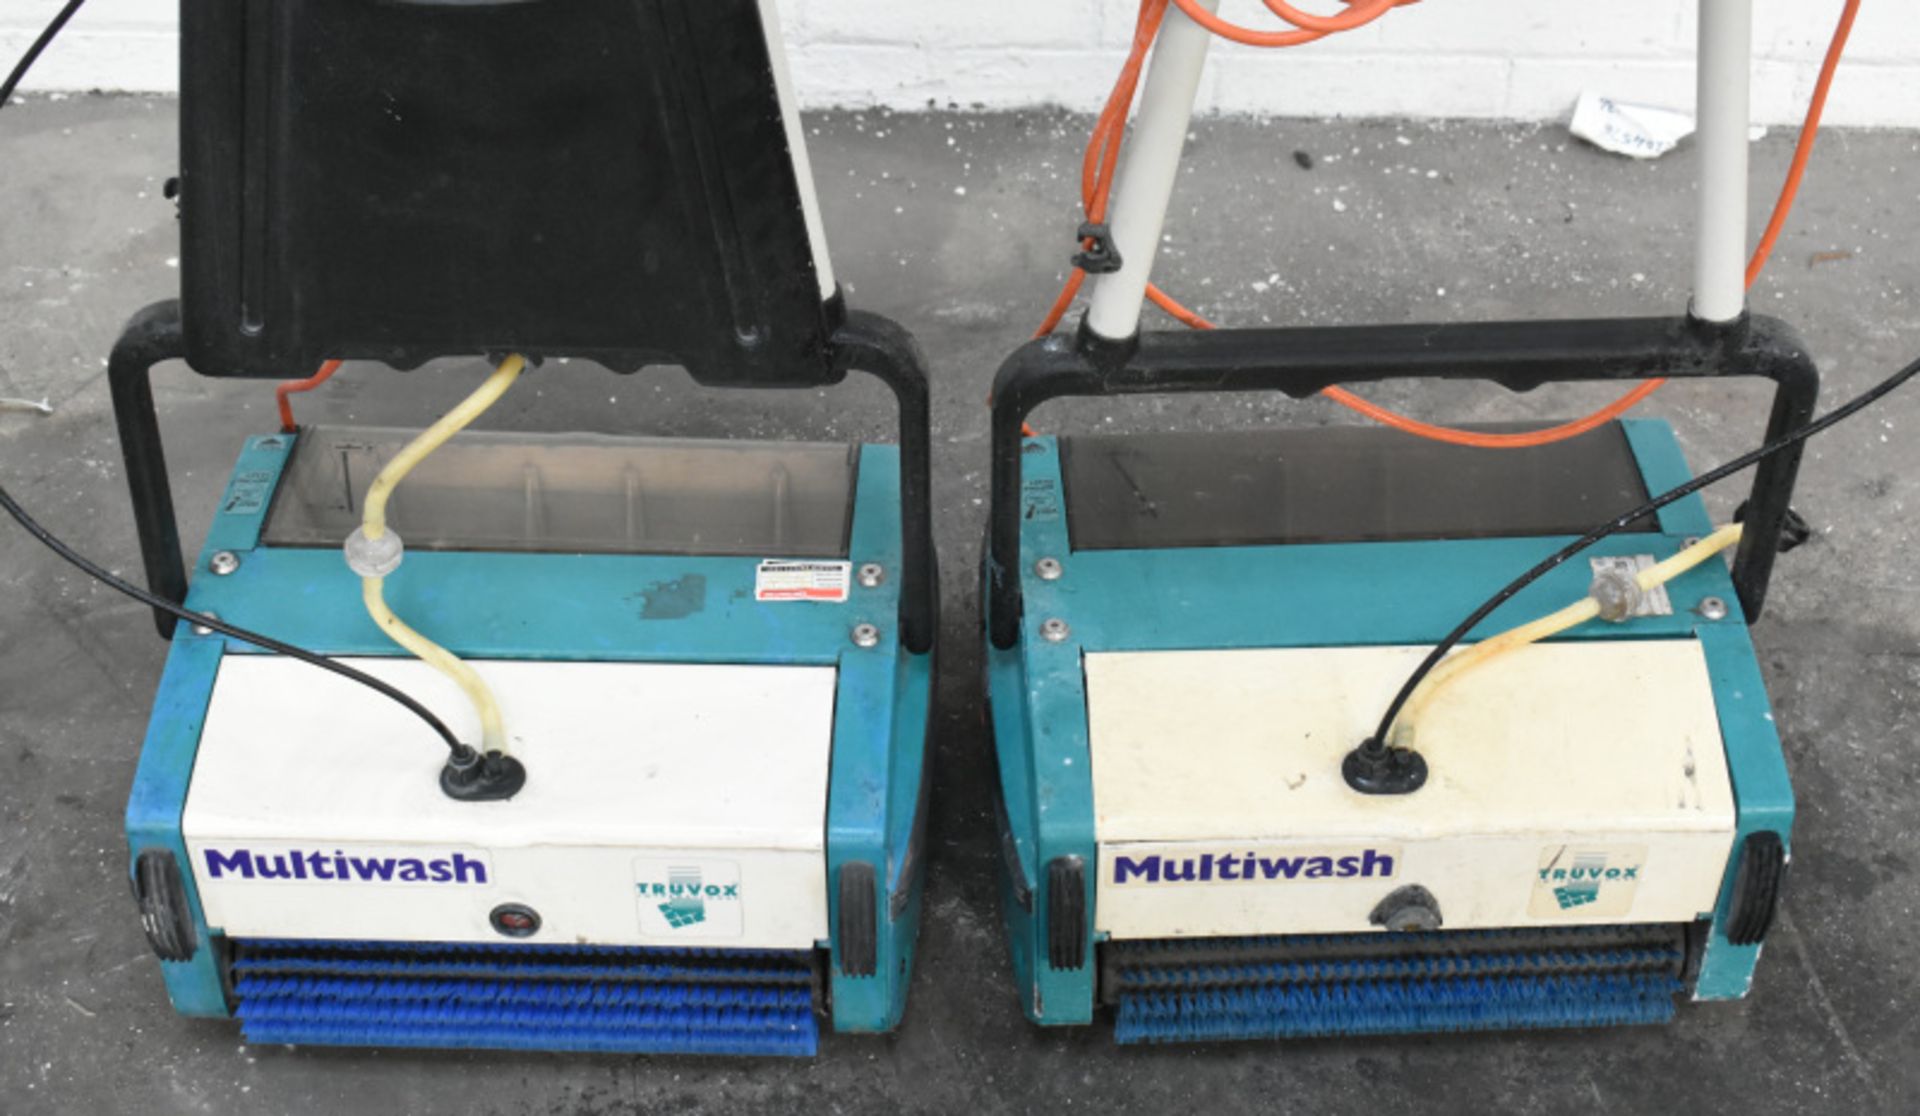 2 x Truvox Multiwash Floor Scrubber Dryer, Model- MW340/Pump - Image 2 of 6